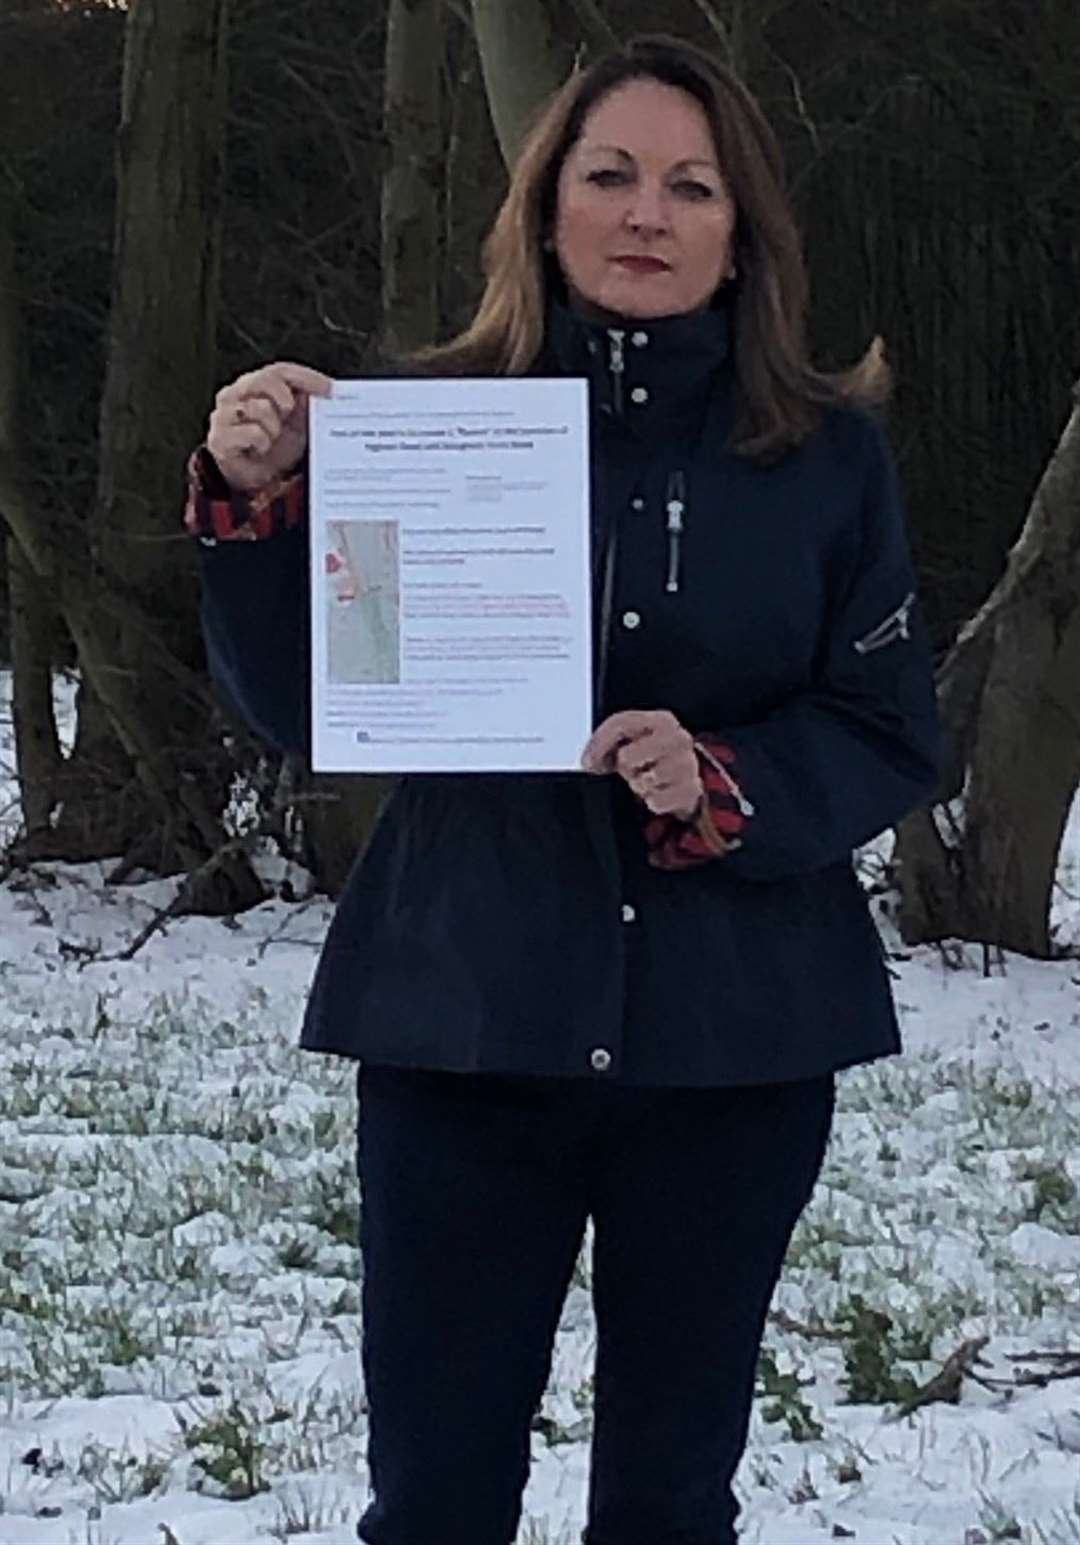 Campaigner Sharron Atkins with her leaflet